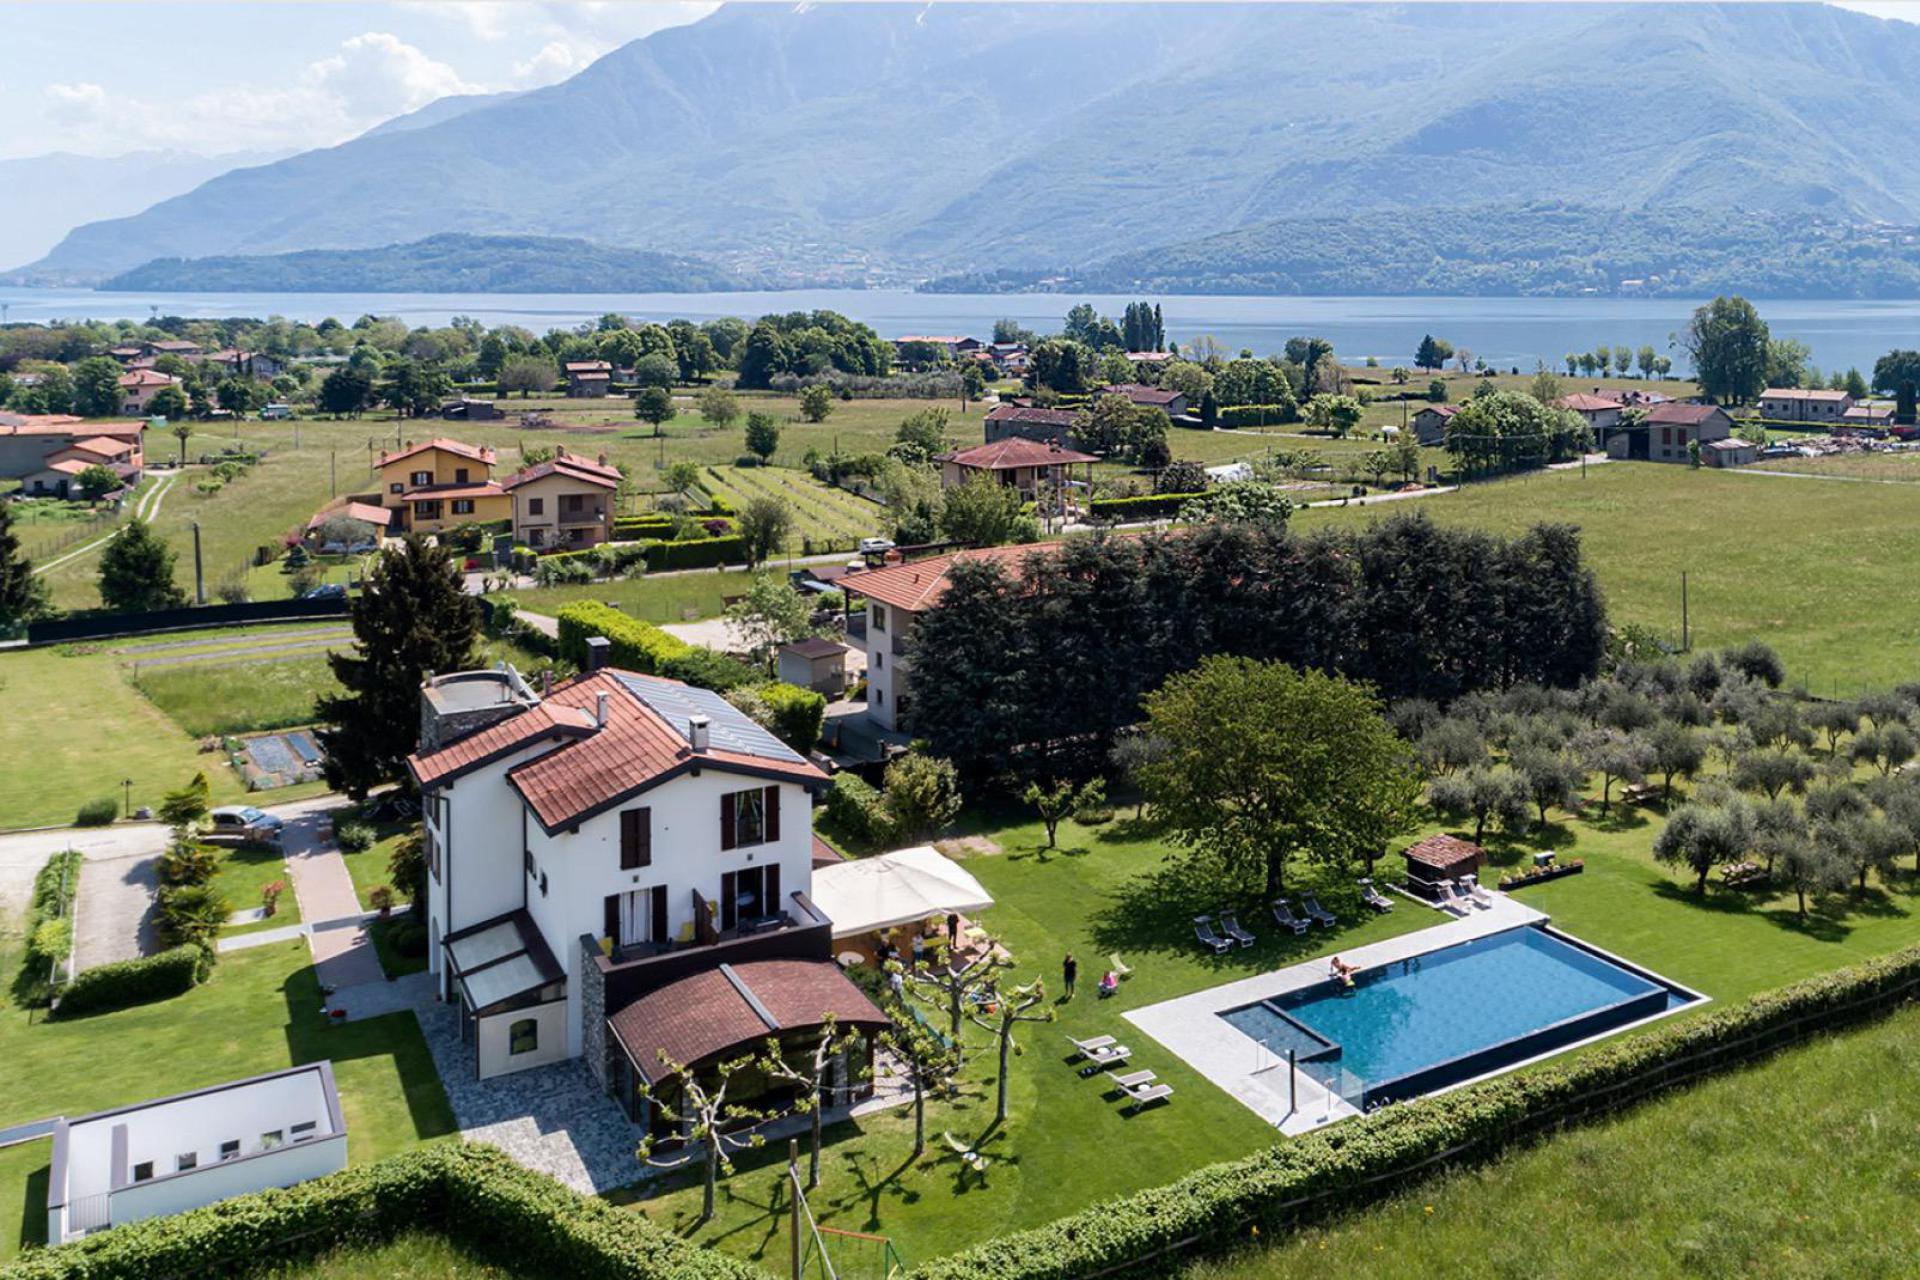 Cozy agriturismo within walking distance of Lake Como